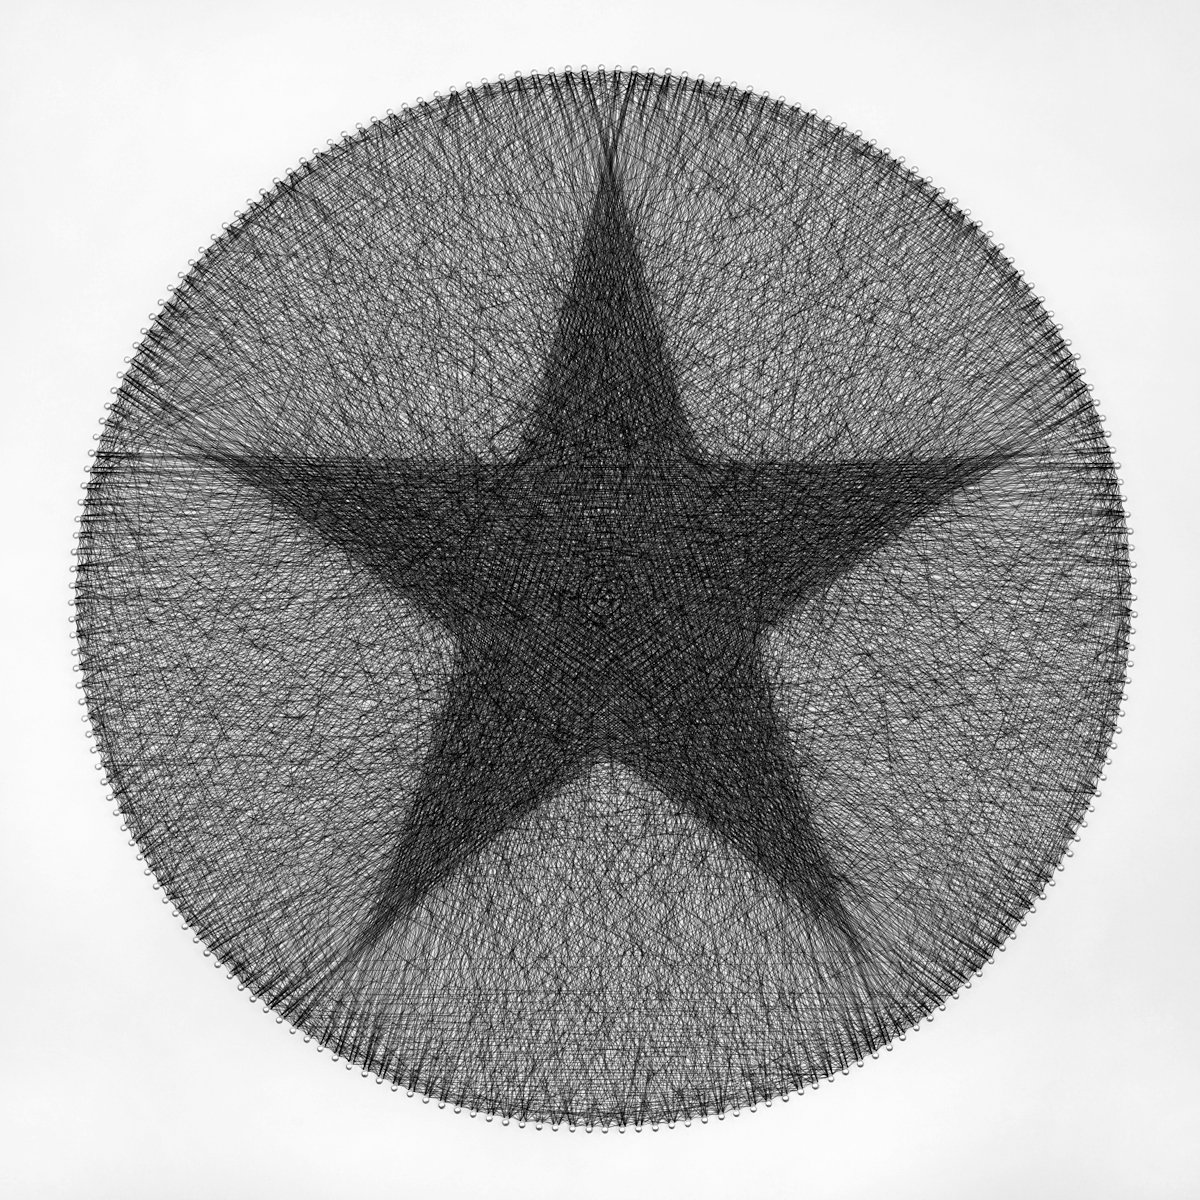 Radiating Star String Art by Andrey Saharov